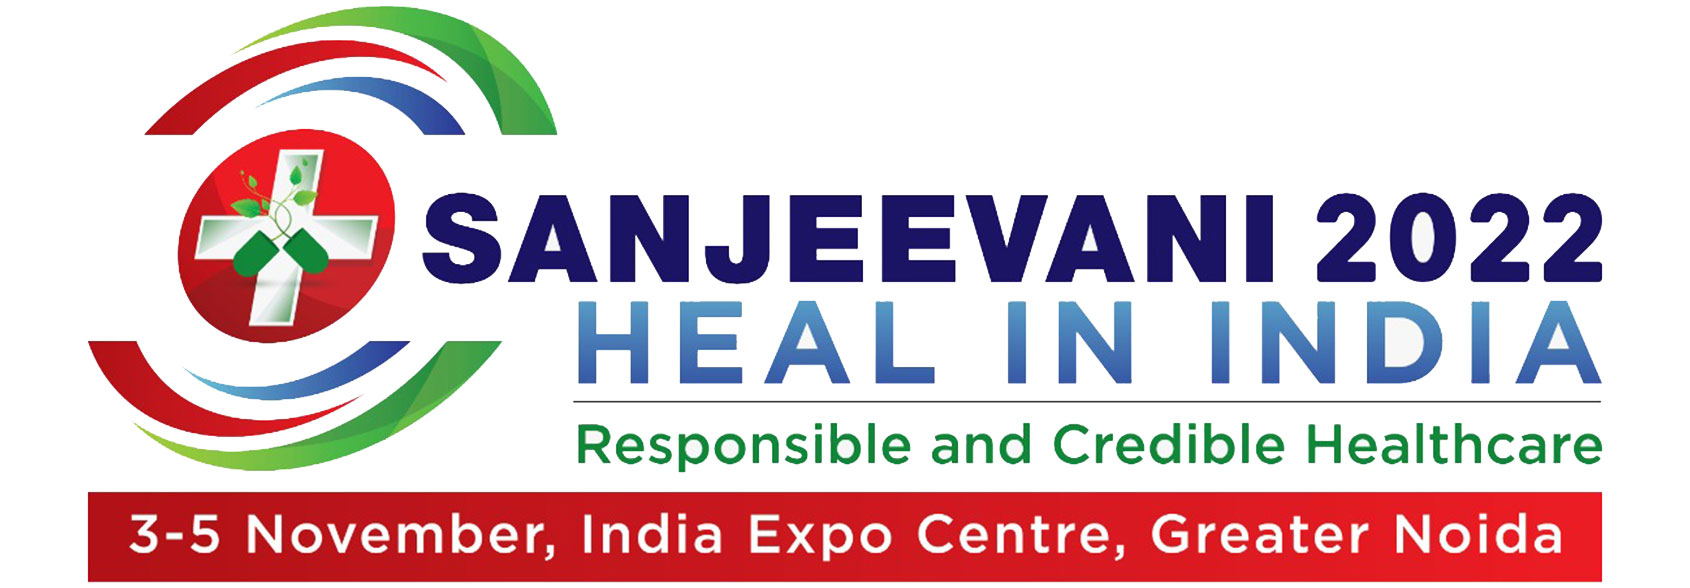 Sanjeevani 2022, 03-05 November 2022, at India Expo Centre, Greater Noida 